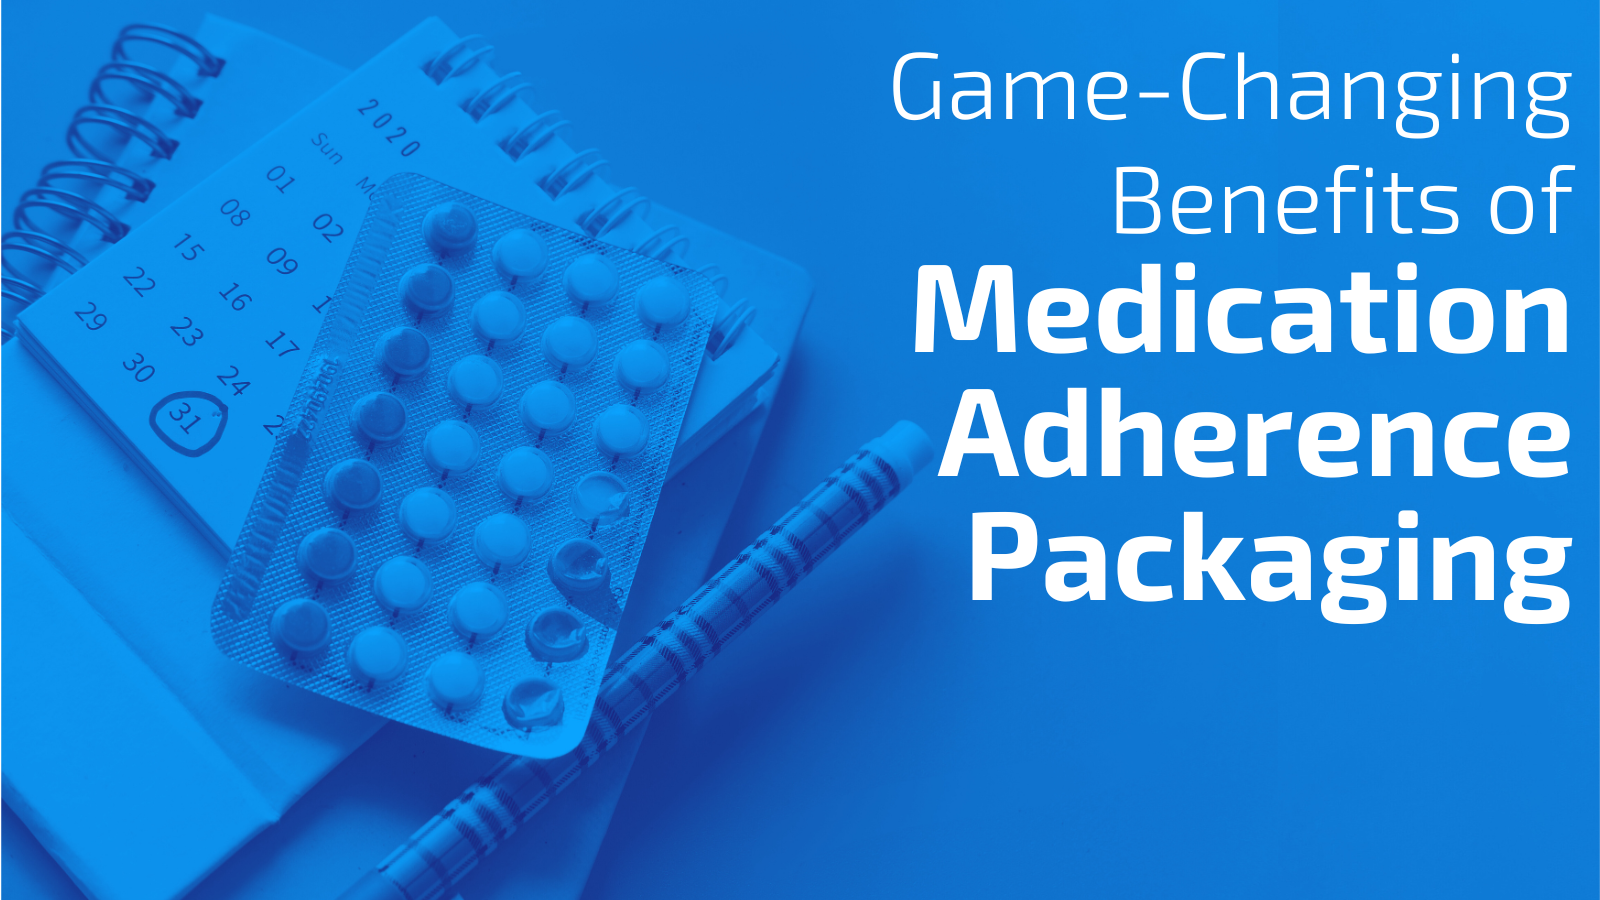 Game-Changing Benefits of Medication Adherence Packaging